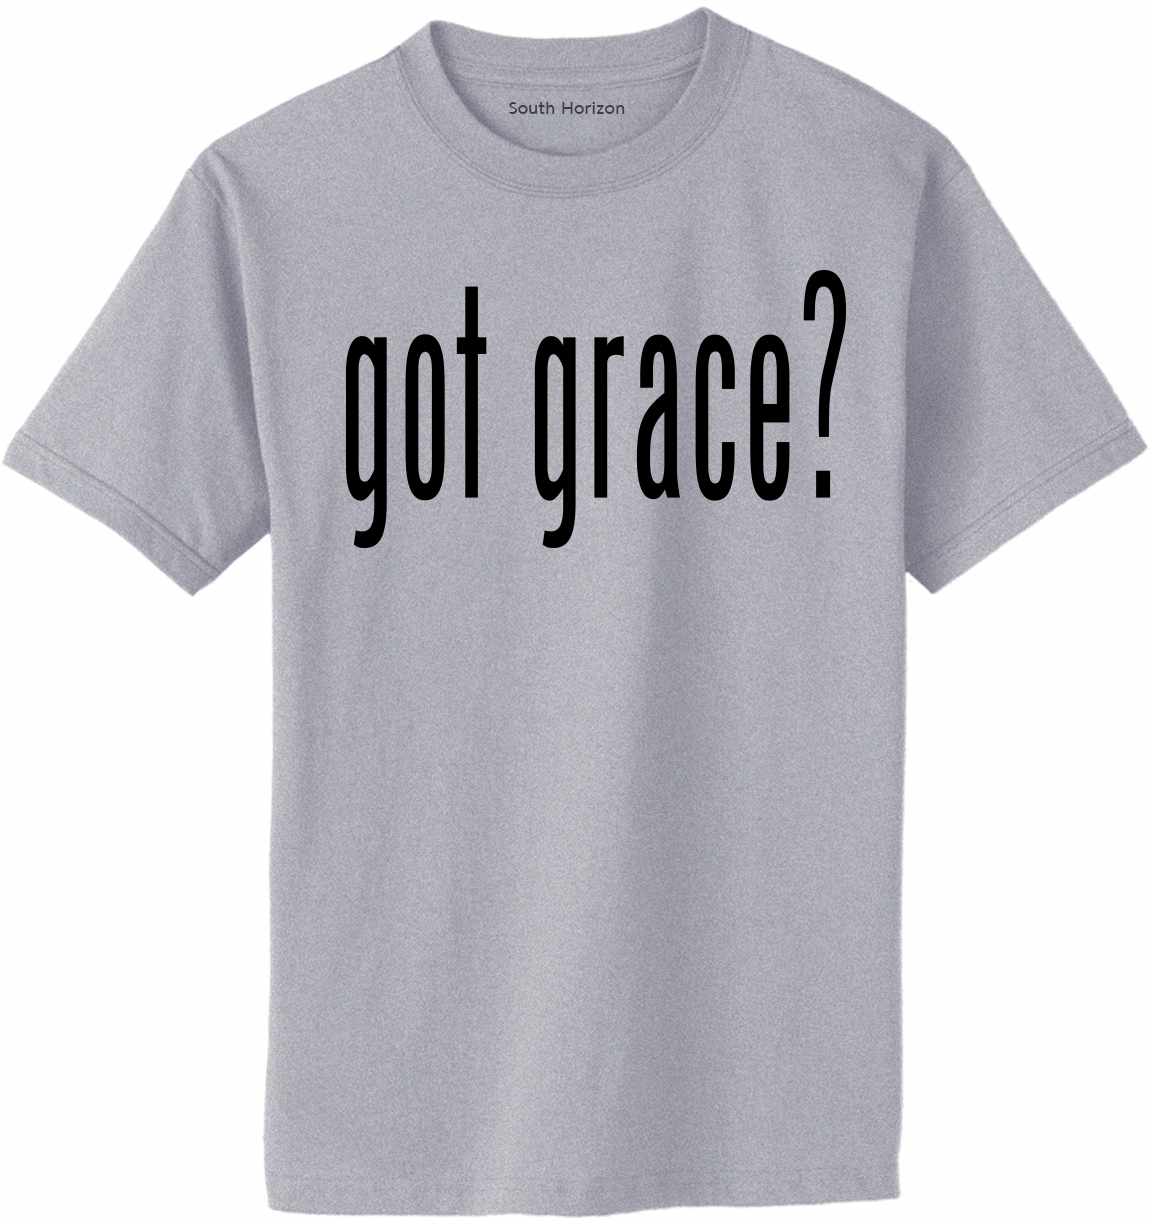 Got Grace? on Adult T-Shirt (#1382-1)